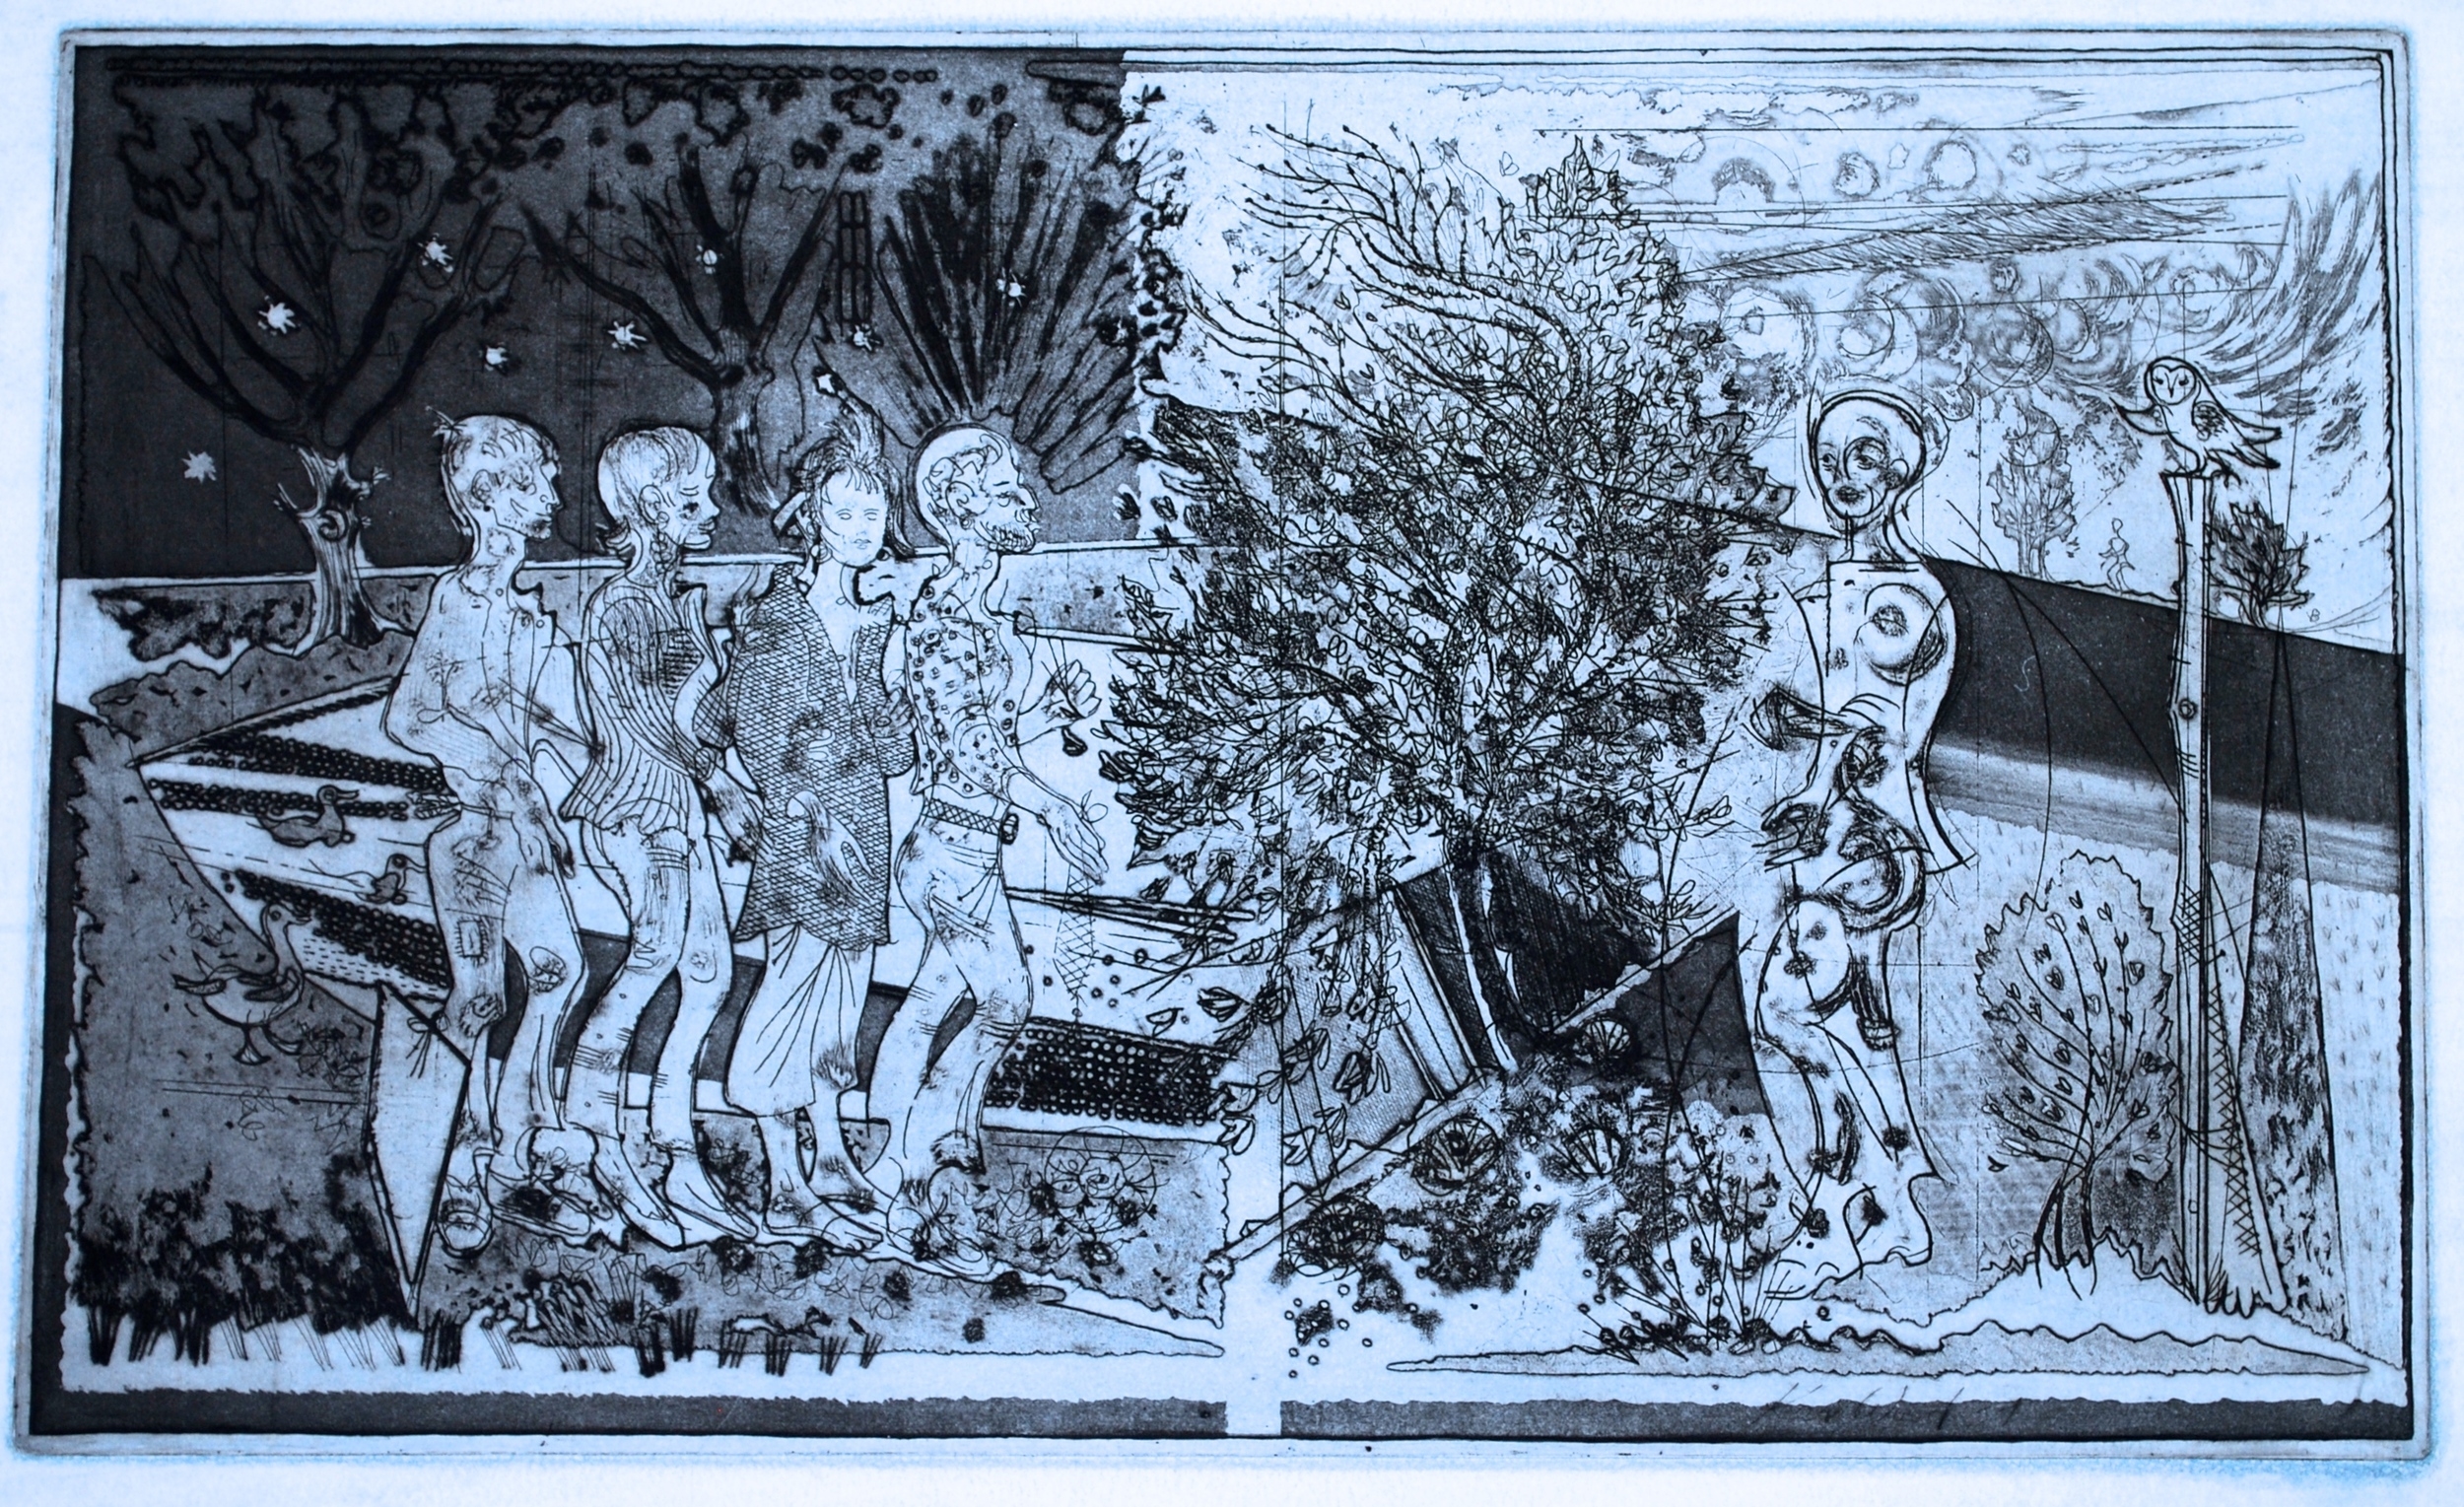  Blueblack Frieze of Figures with Tree Etching c1990, &nbsp;50 x 30 cm 